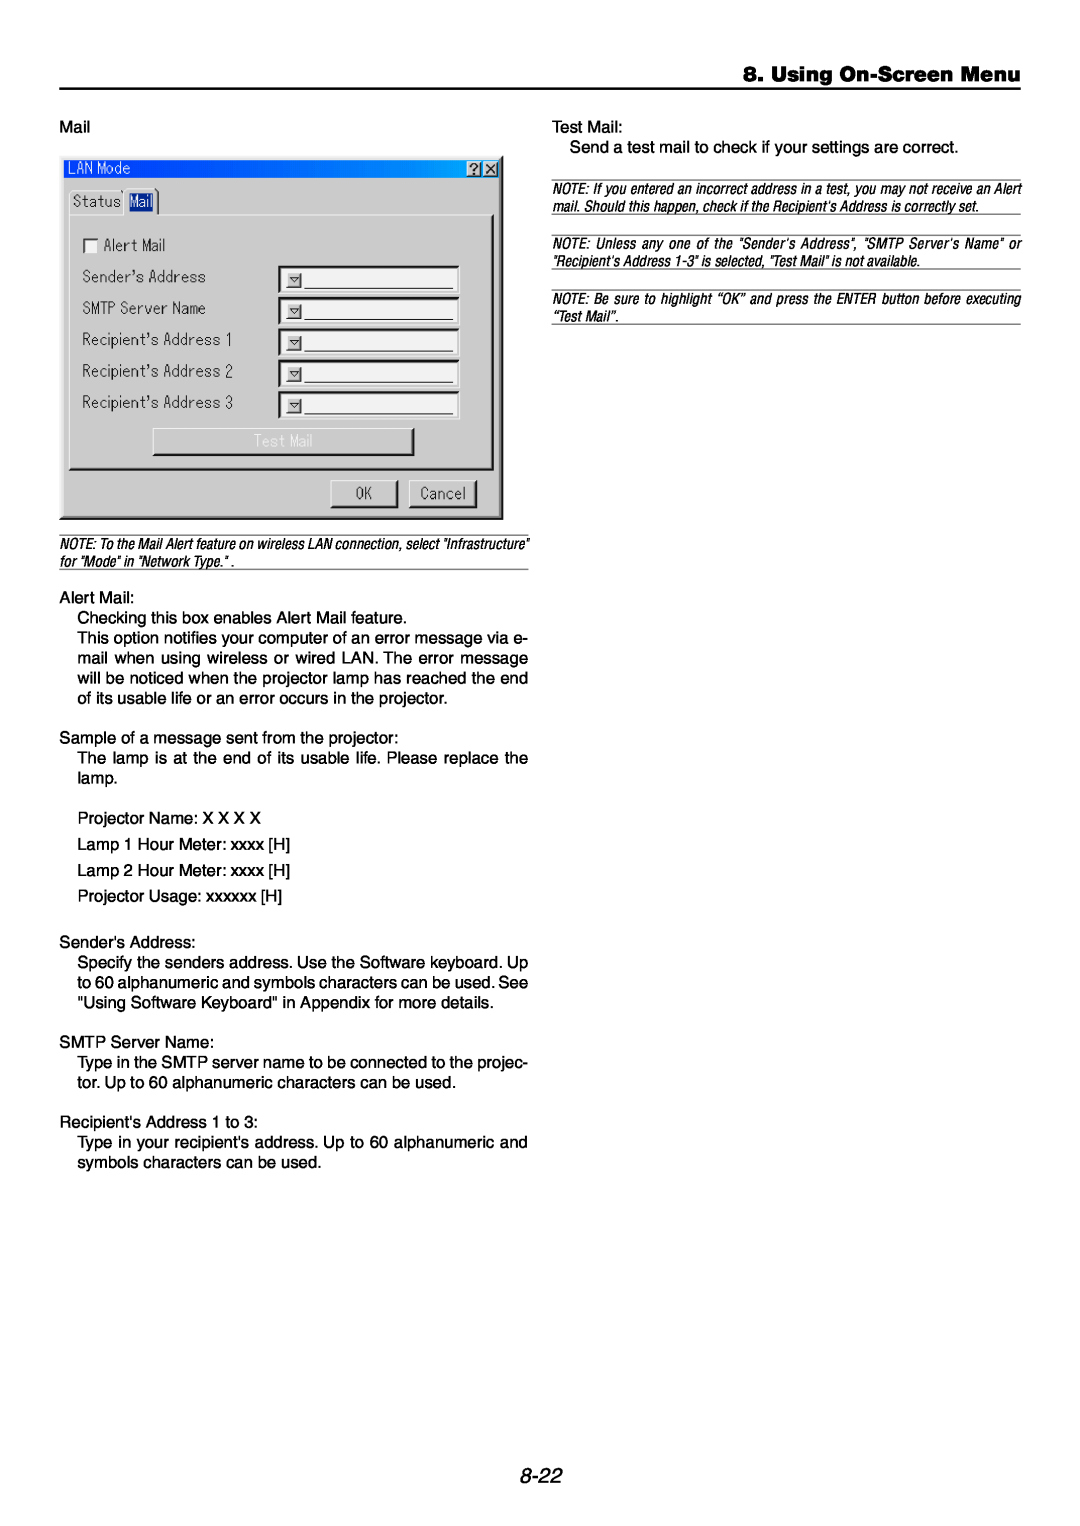 NEC GT6000 user manual Using On-ScreenMenu, 8-22, Mail 